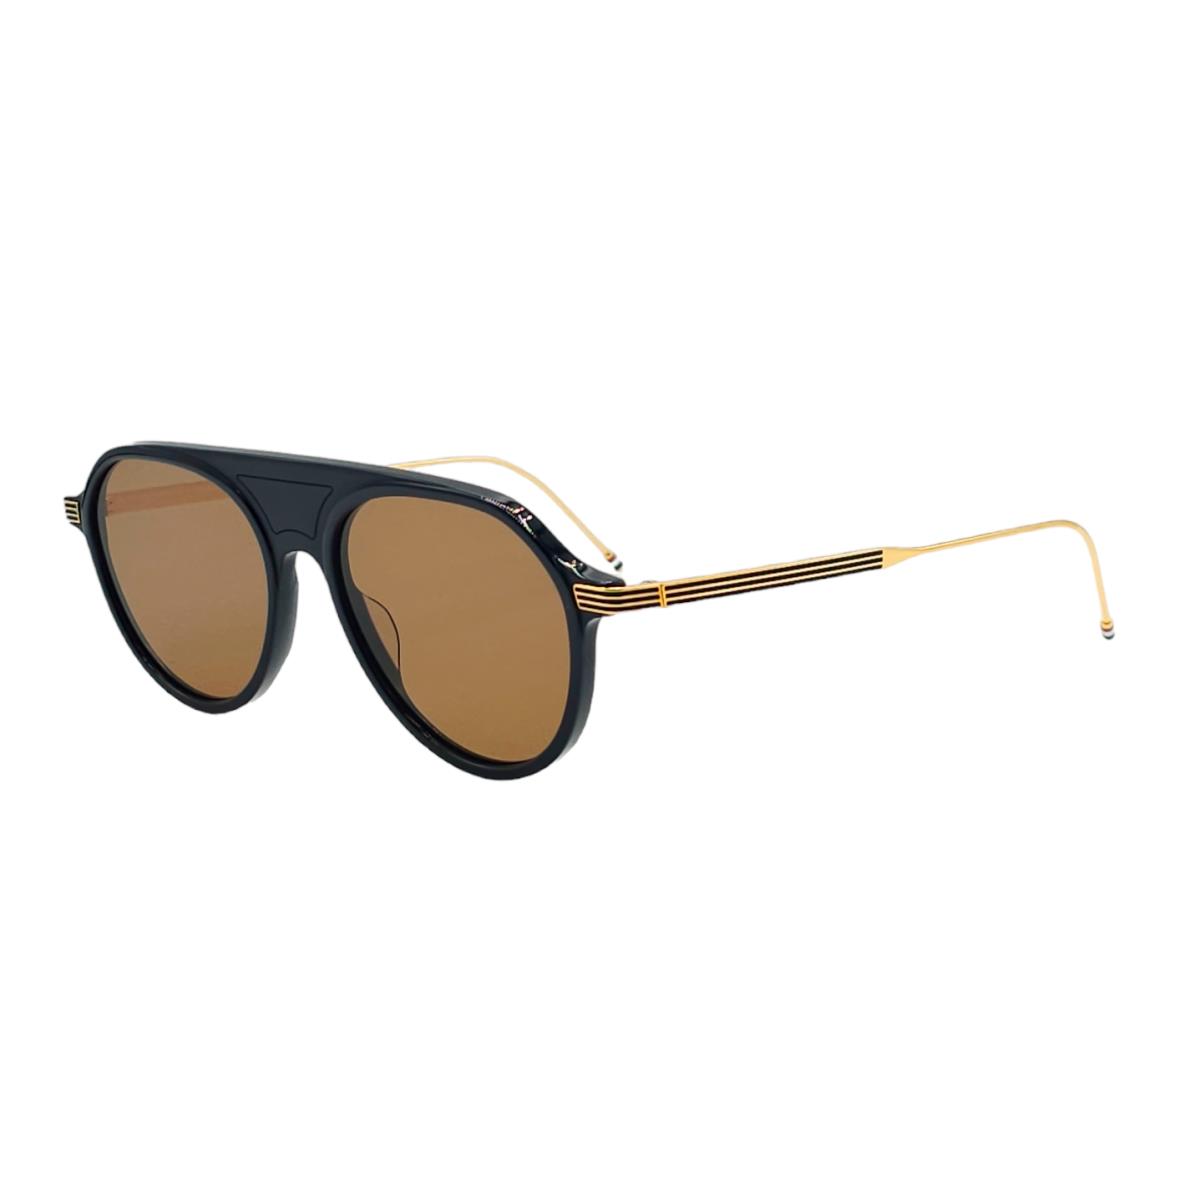 Thom Browne TB809 Sunglasses Color C Navy-gold / Brown Lenses